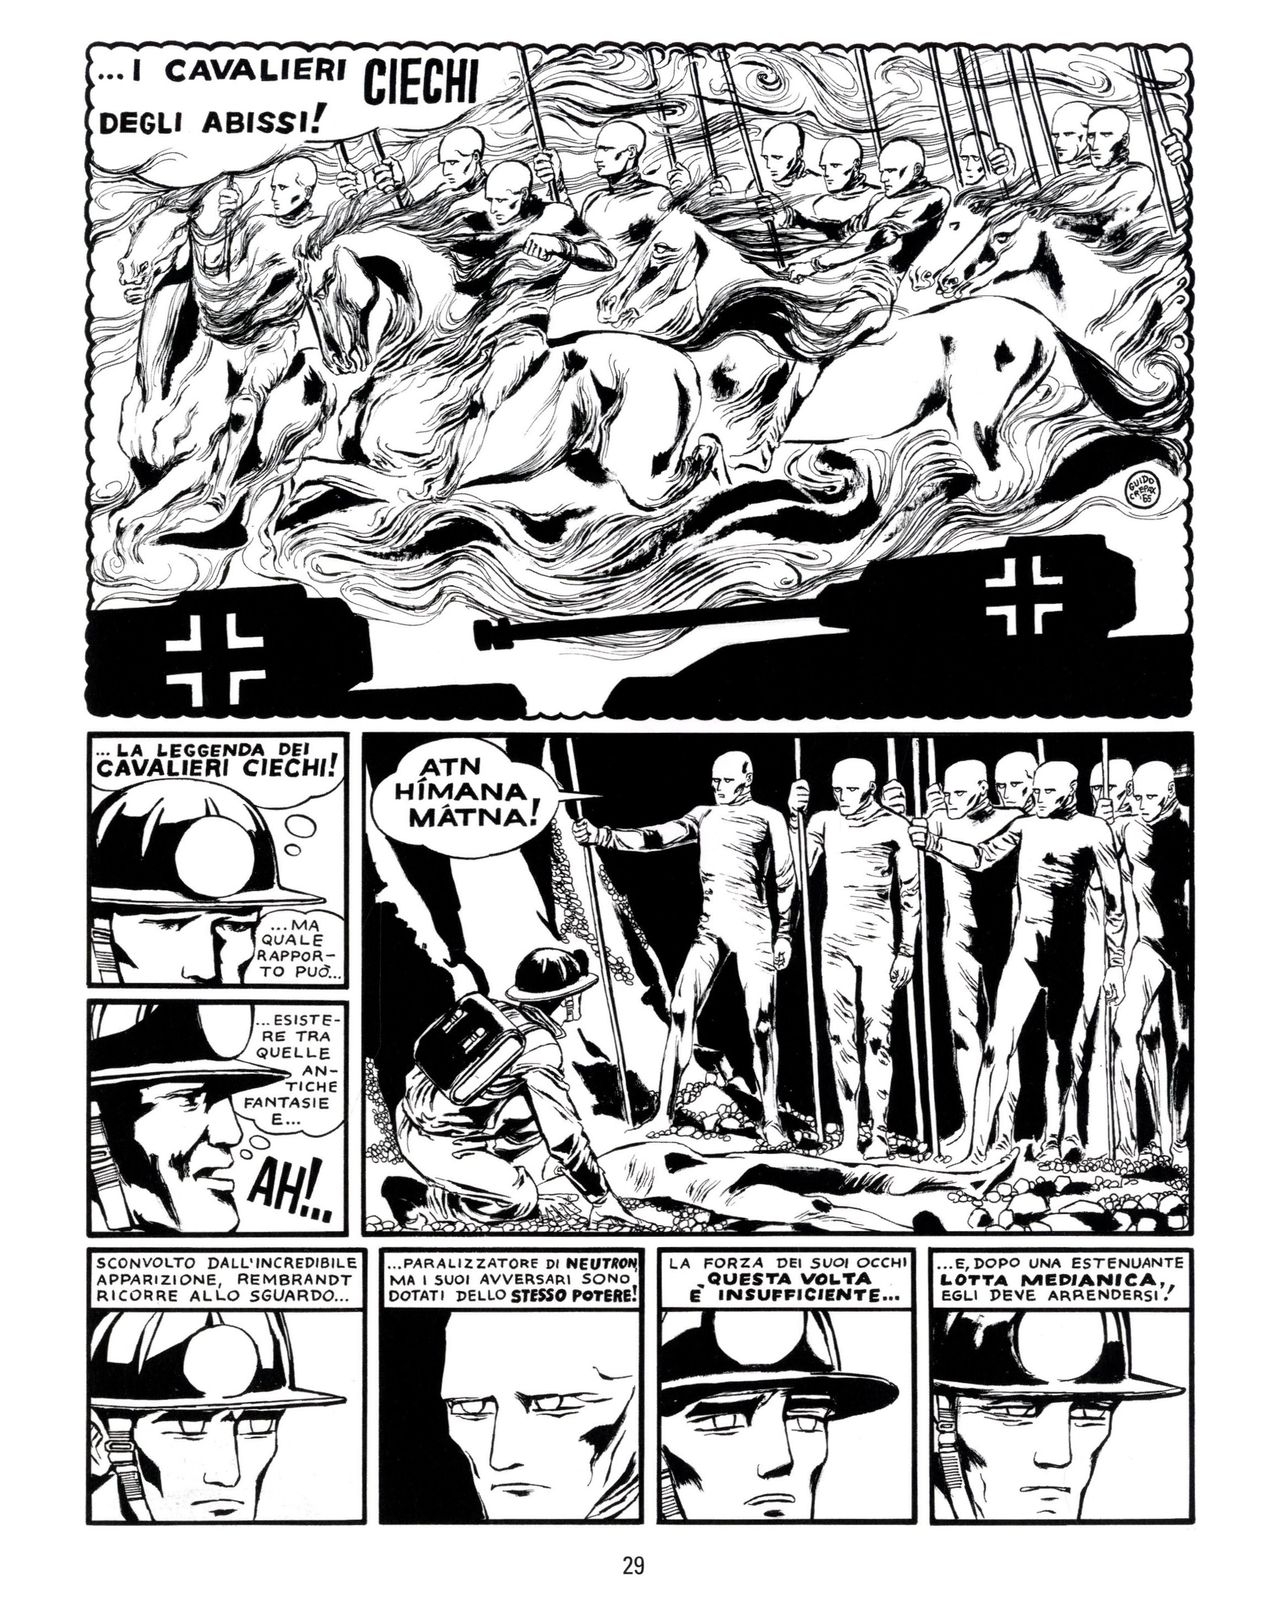 [Guido Crepax] Erotica Fumetti #25 : L'ascesa dei sotterranei : I cavalieri ciechi [Italian] 30